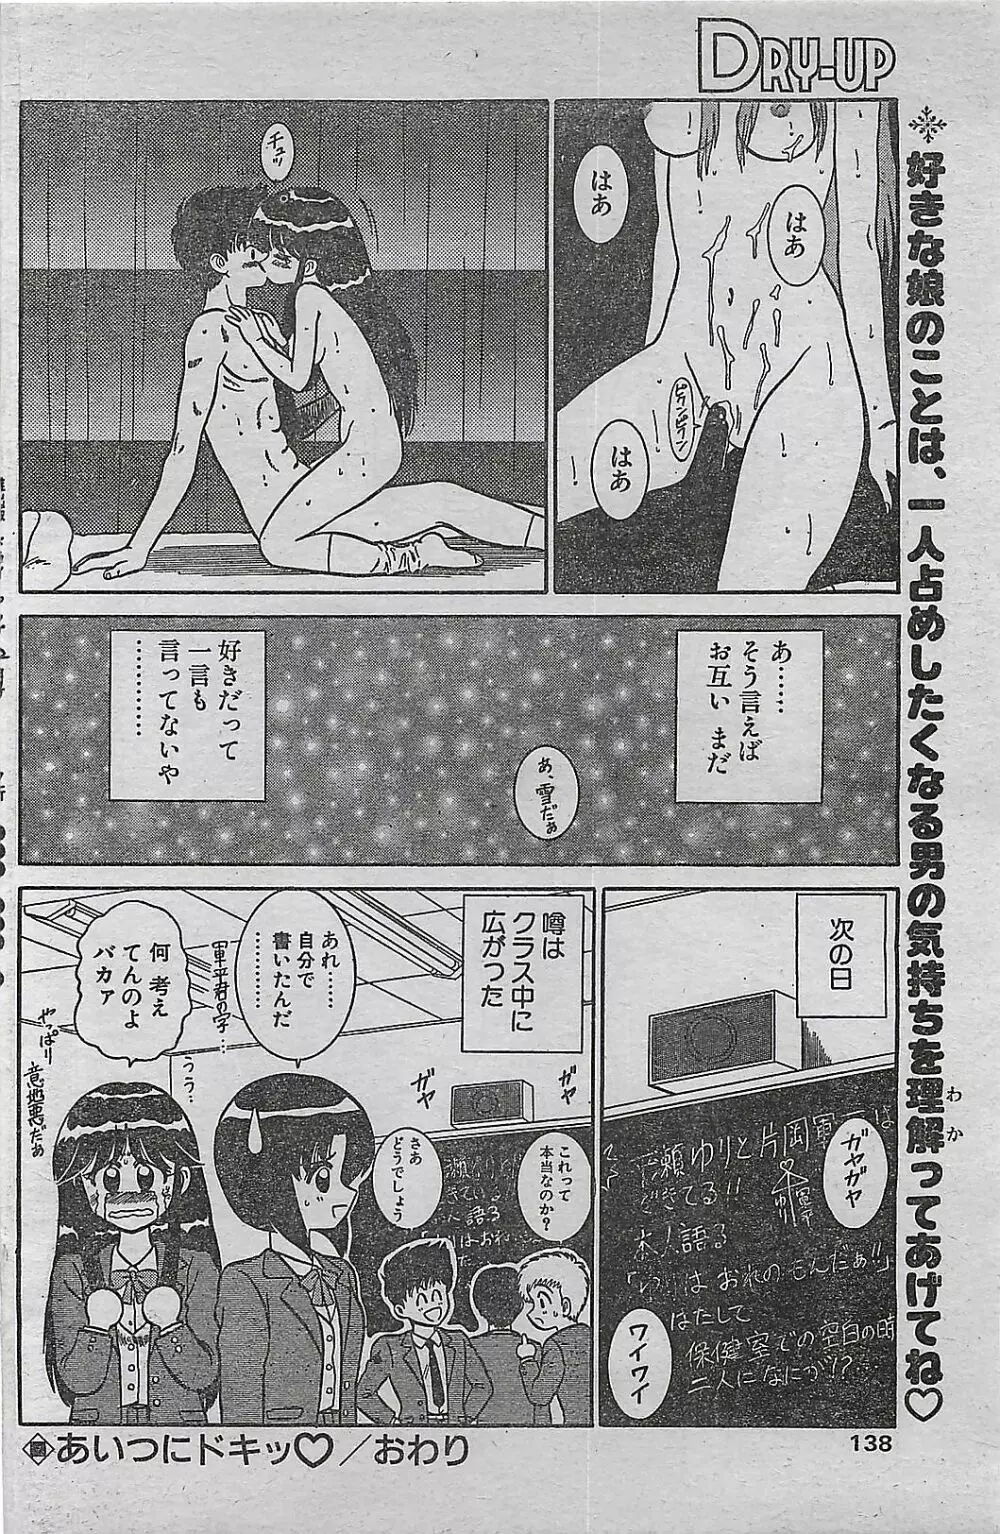 COMIC ドライ-アップ No.4 1995年02月号 138ページ